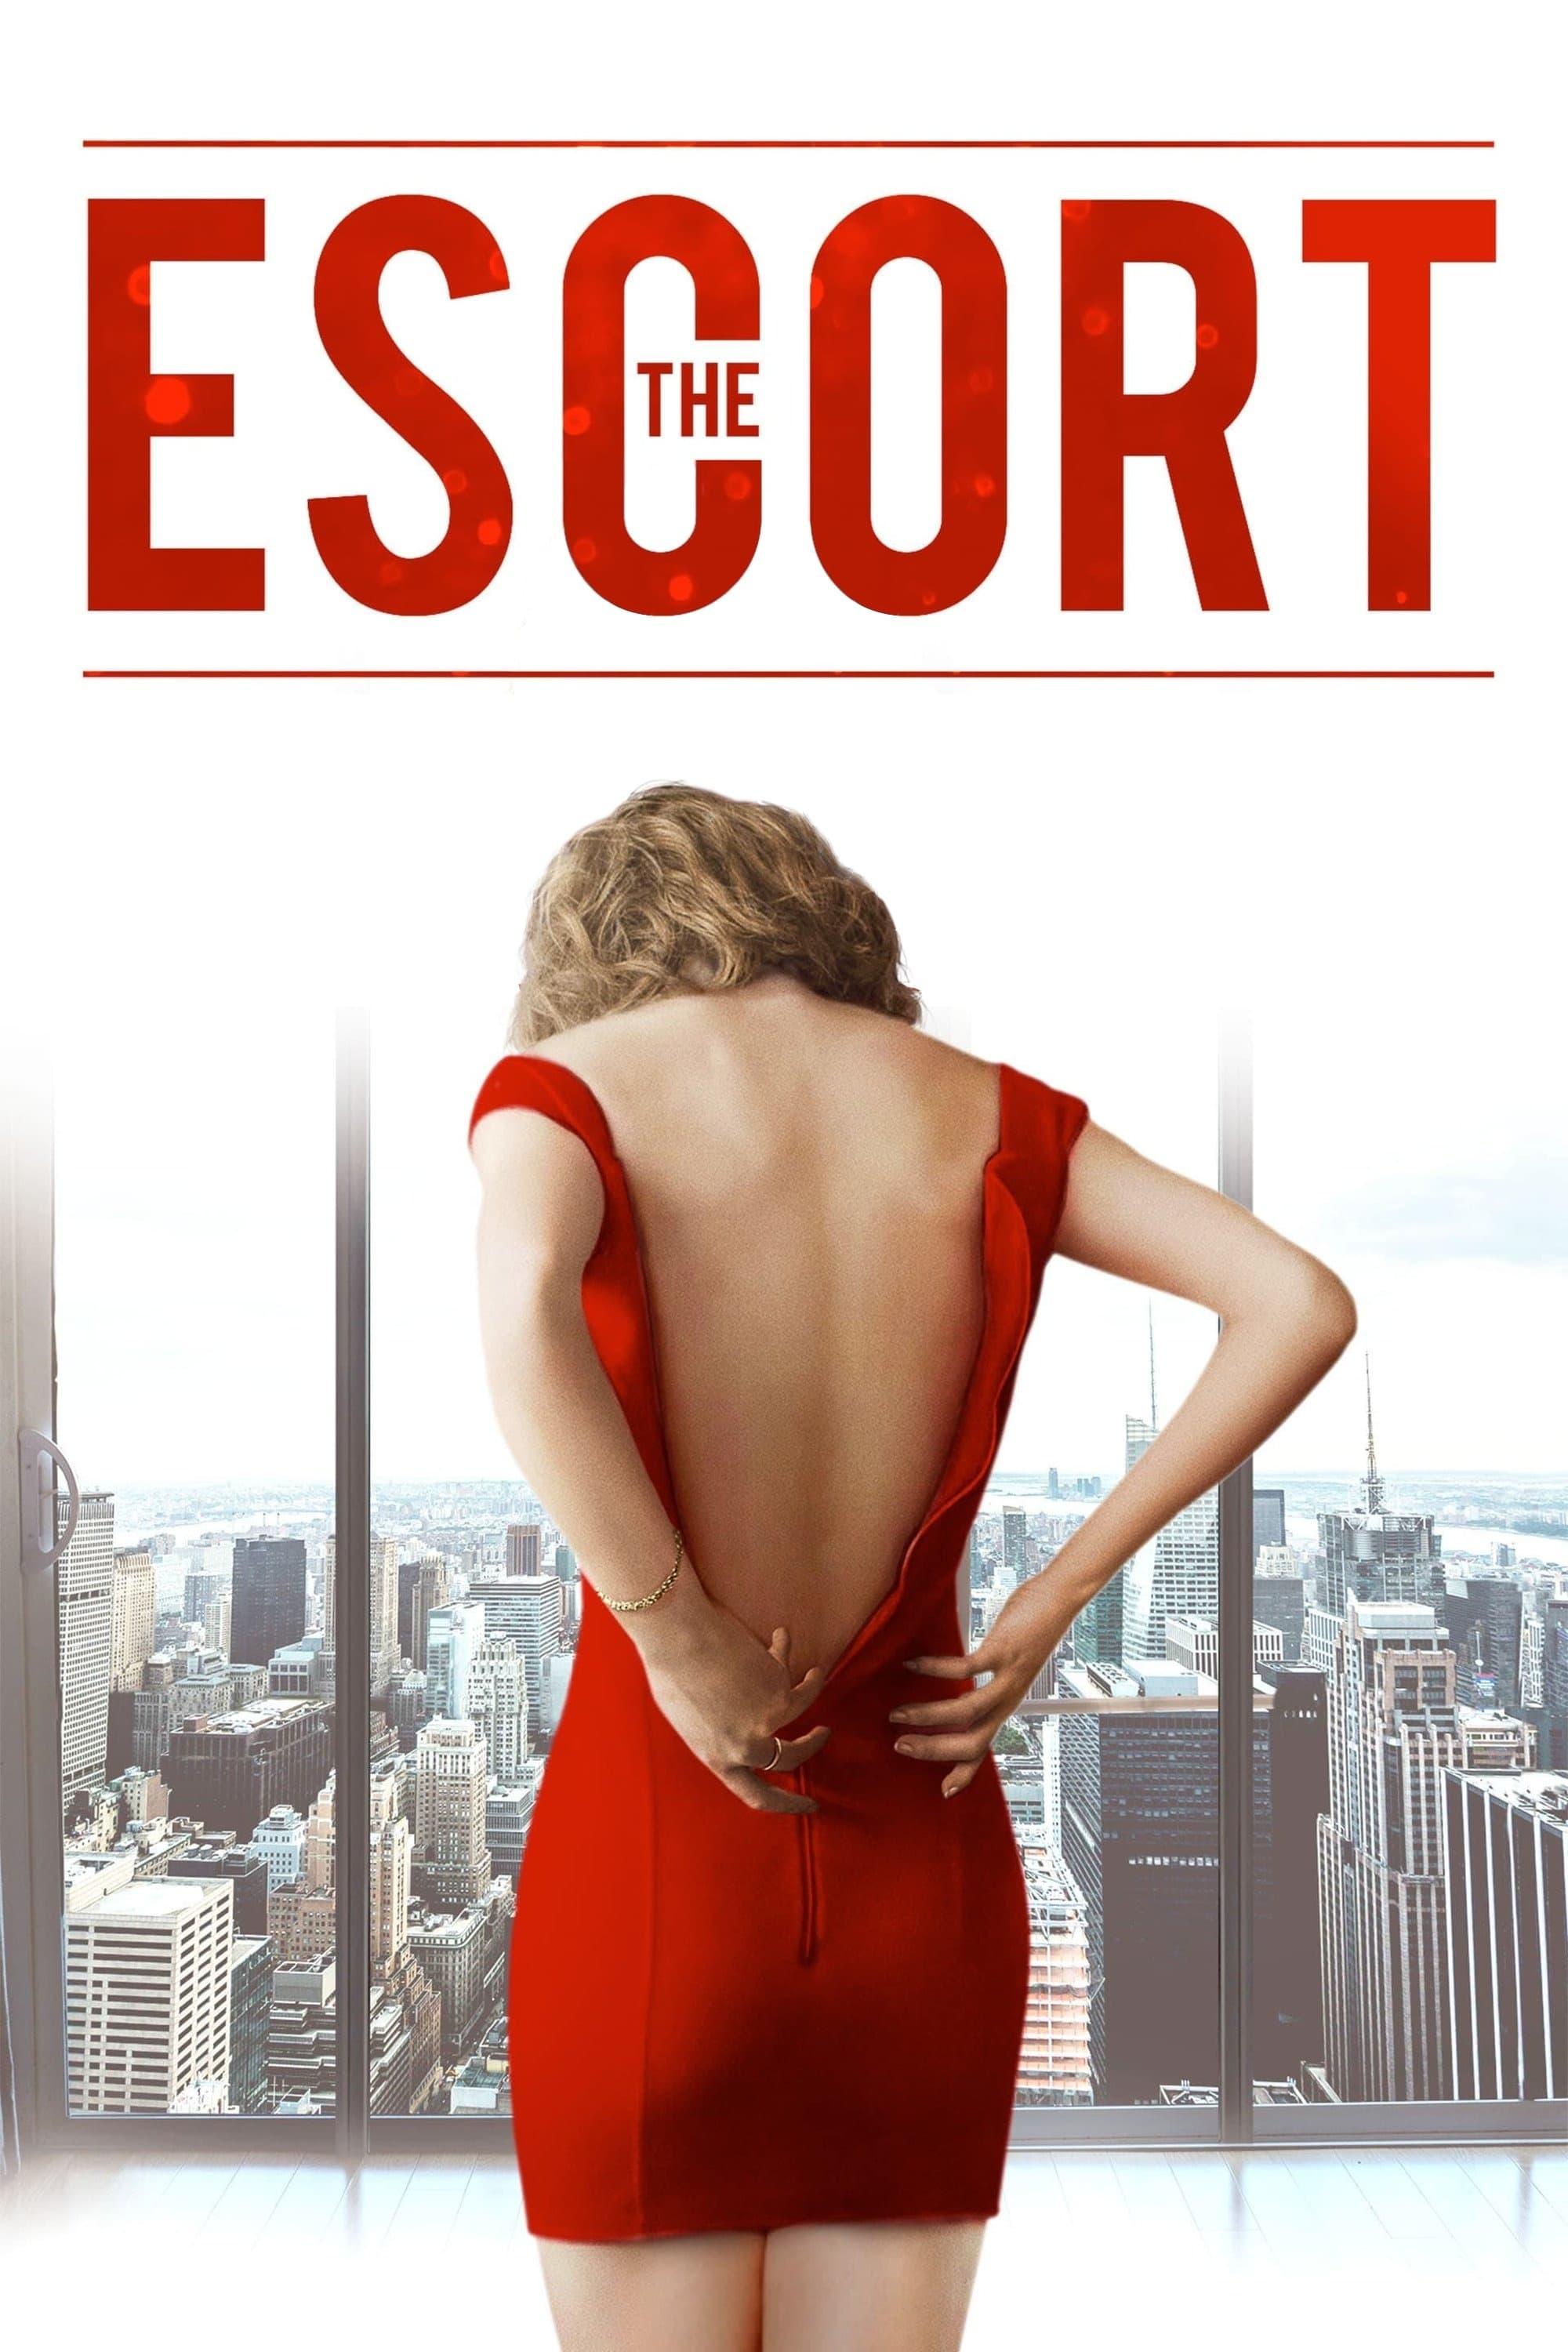 The Escort - Sex Sells poster